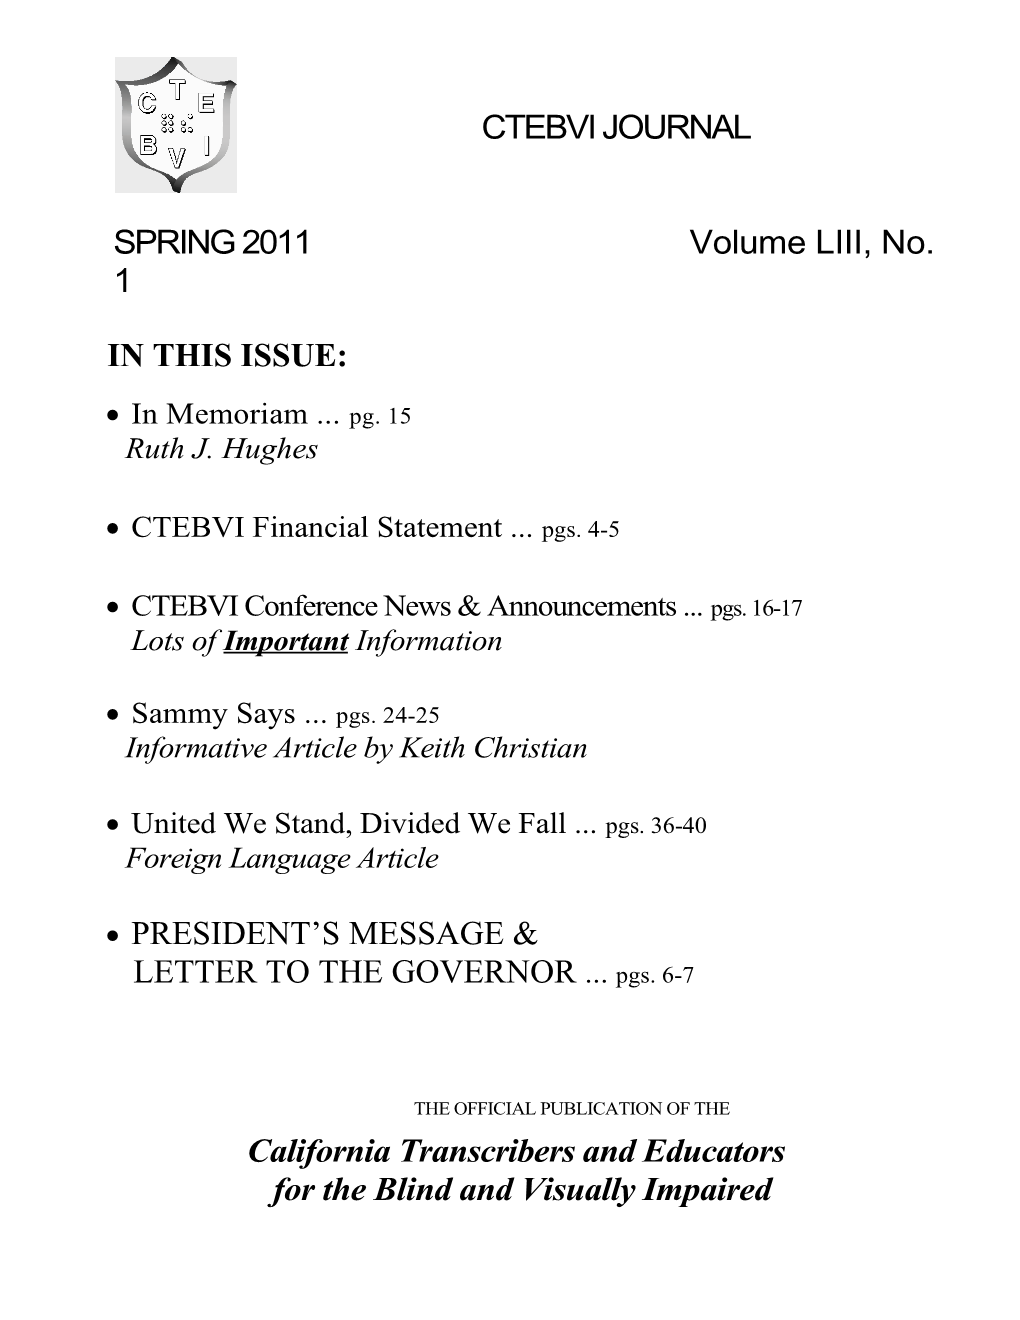 CTEBVI Financial Statement Pgs. 4-5